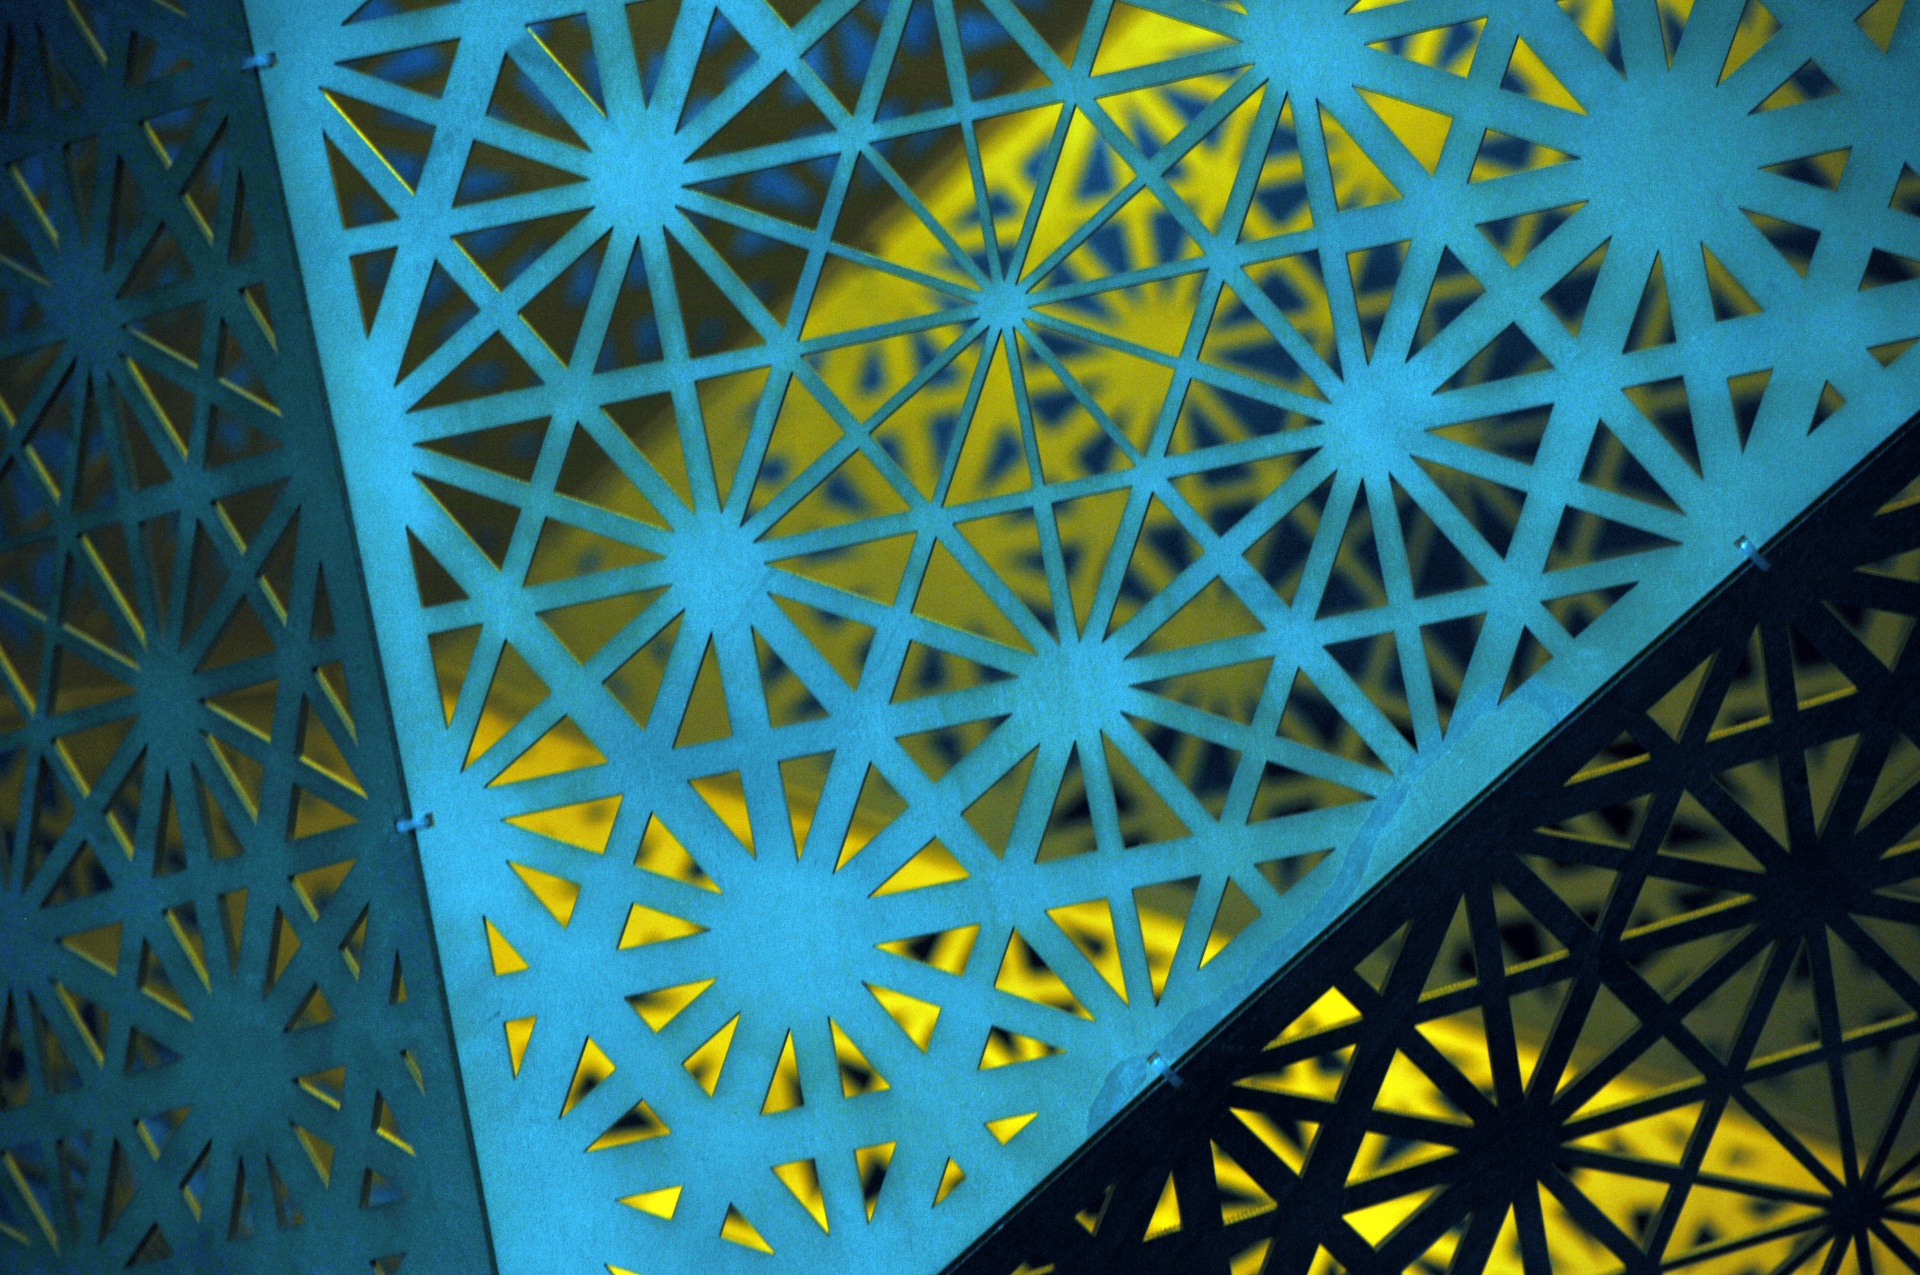 wallpaper of a metal starburst grid with blue back lighting